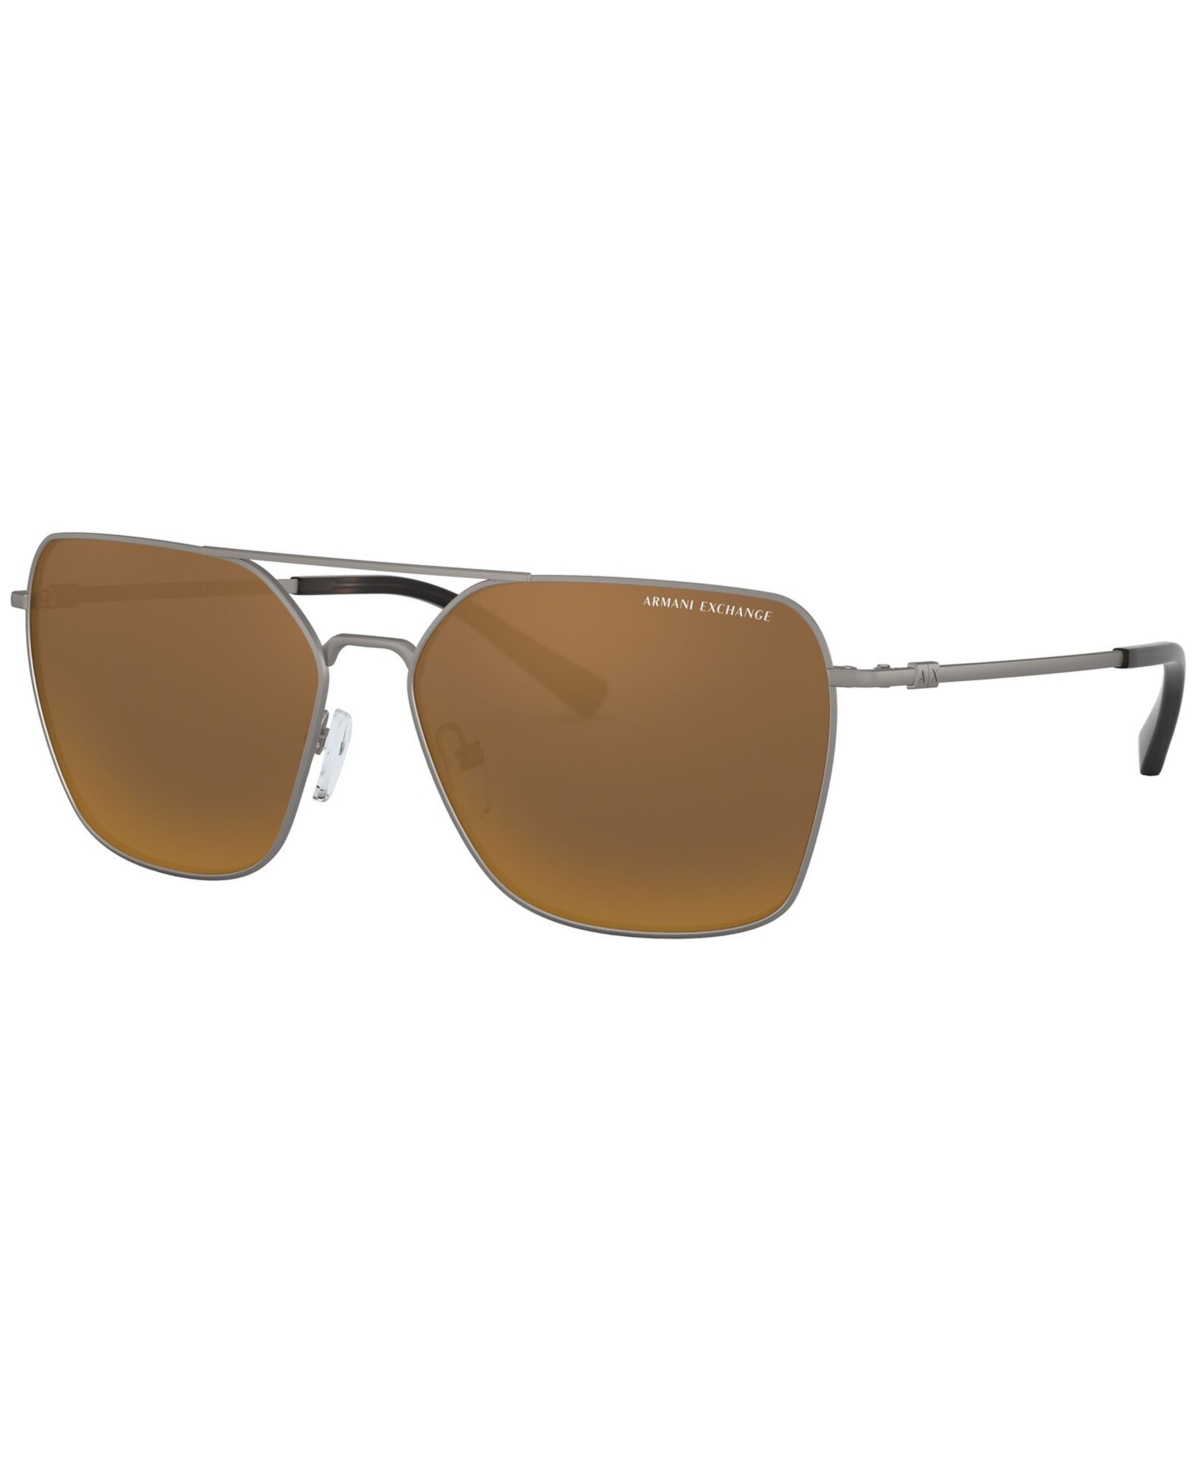 EAN 8053672116205 product image for Armani Exchange Sunglasses, AX2029S | upcitemdb.com